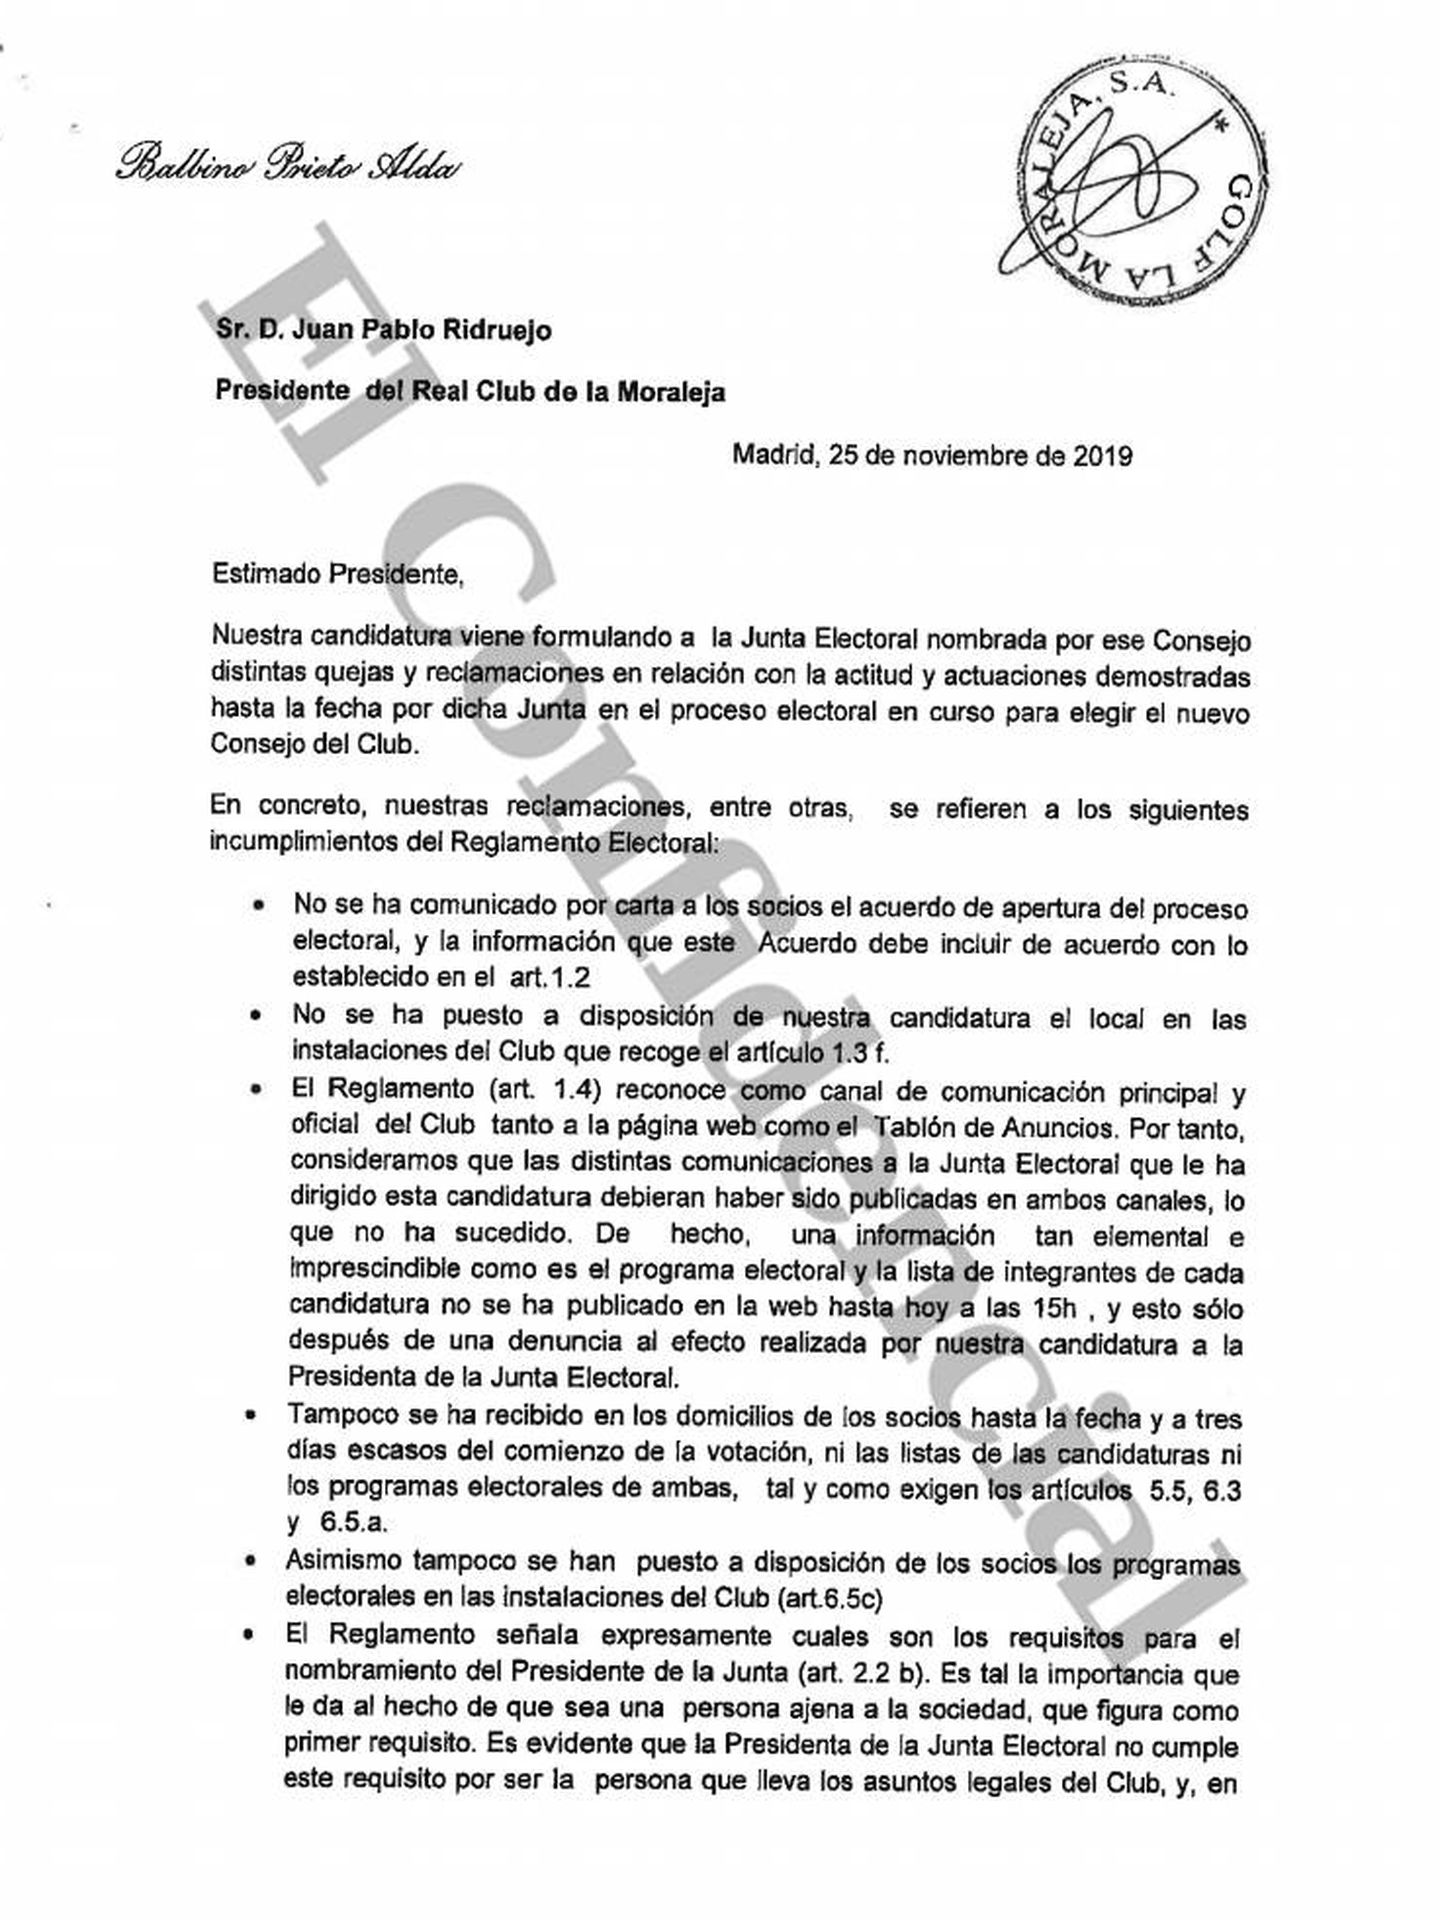 Carta enviada por Balbino Prieto al presidente y candidato, Juan Pablo Ridruejo. (EC)